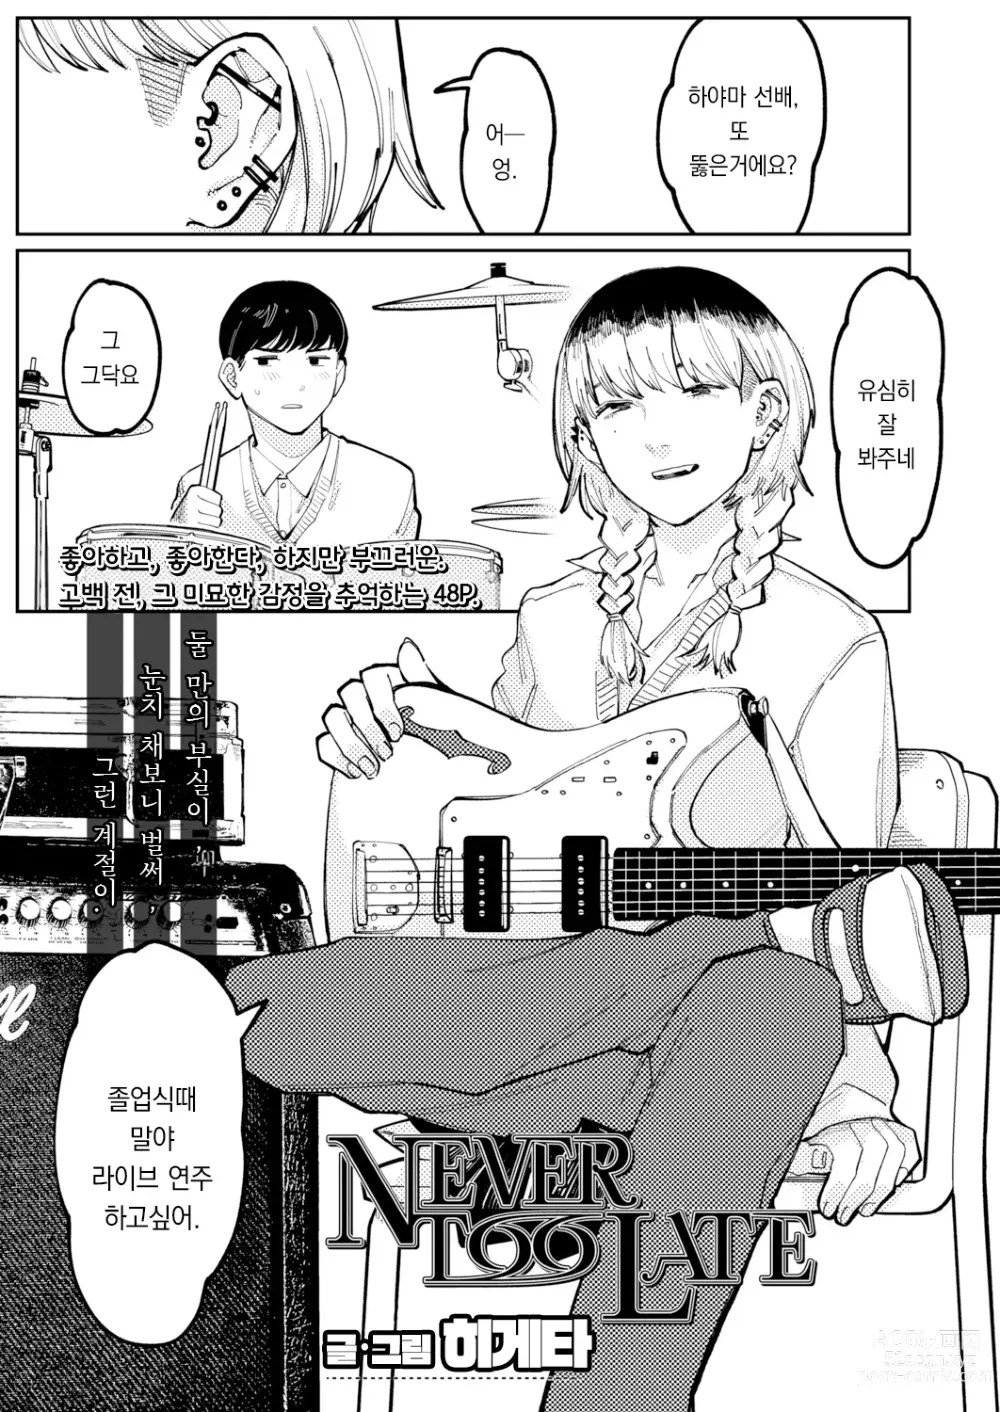 Page 2 of manga NEVER TOO LATE